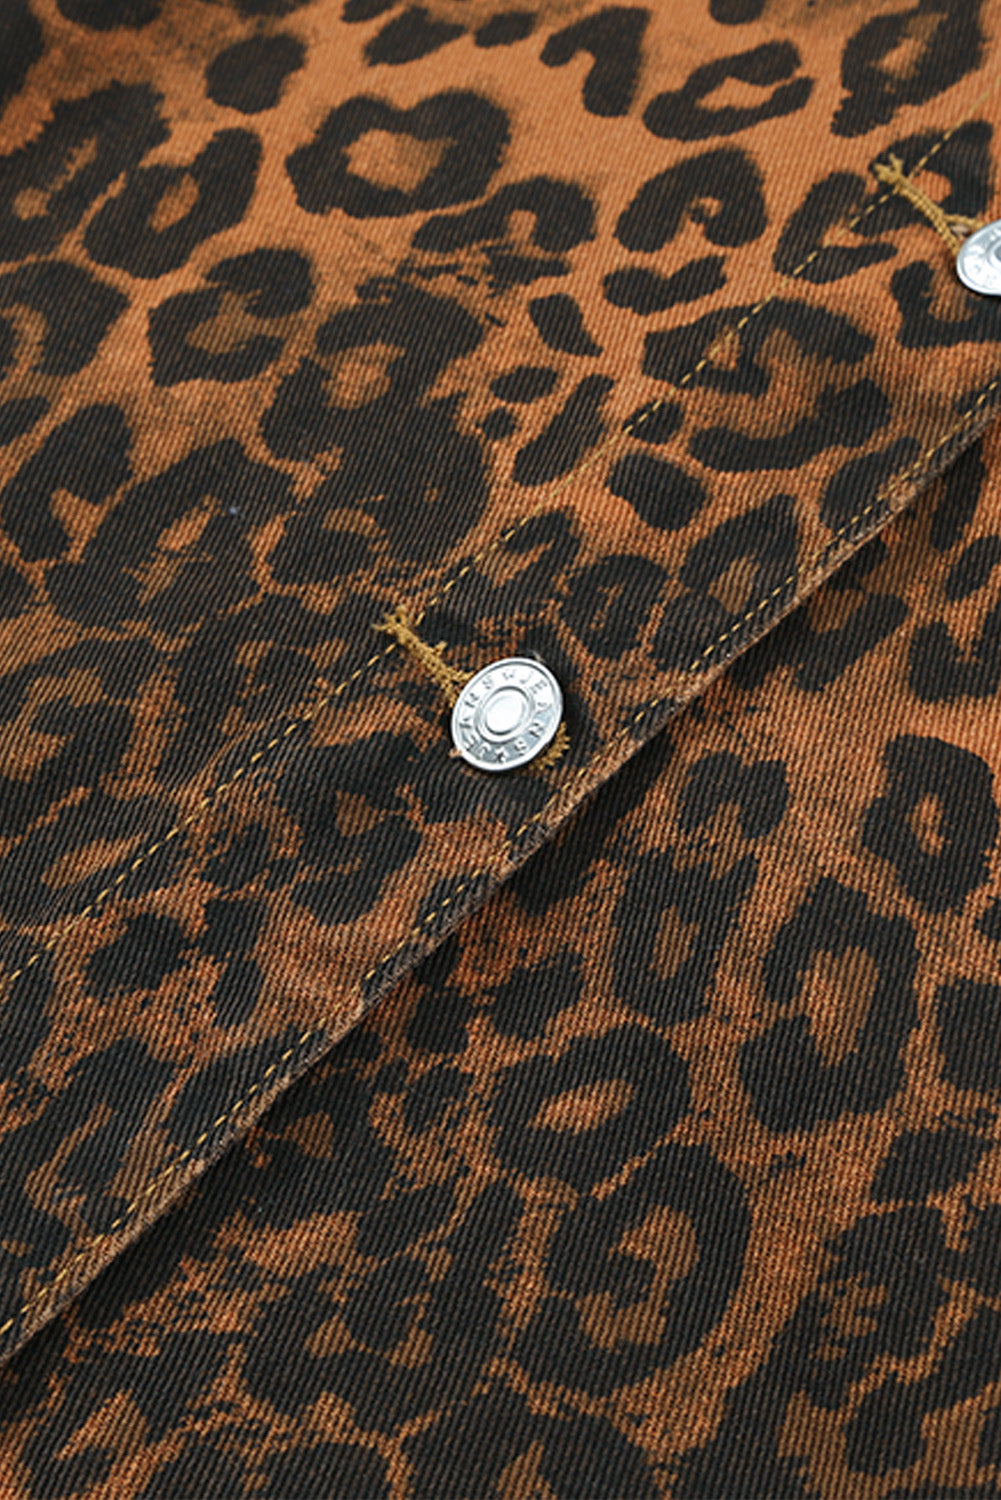 Leopard Ripped Hooded Denim Jacket